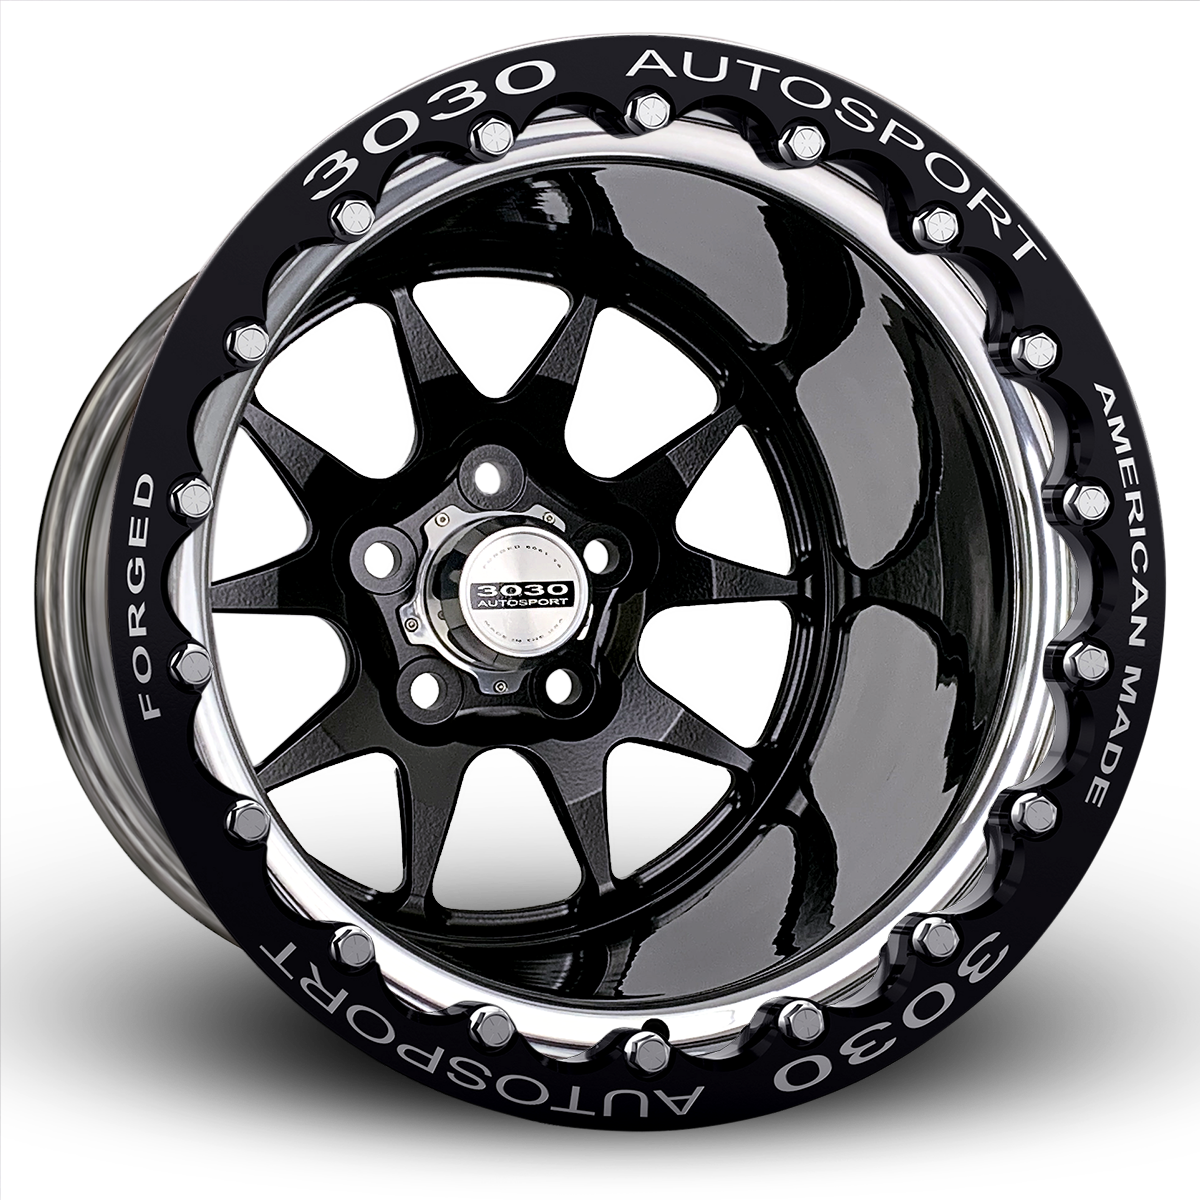 MACH-10 Double-Beadlock Wheel, Size: 15x12", Bolt Pattern: 5x4.5", Backspace: 7" [Black/Polished]